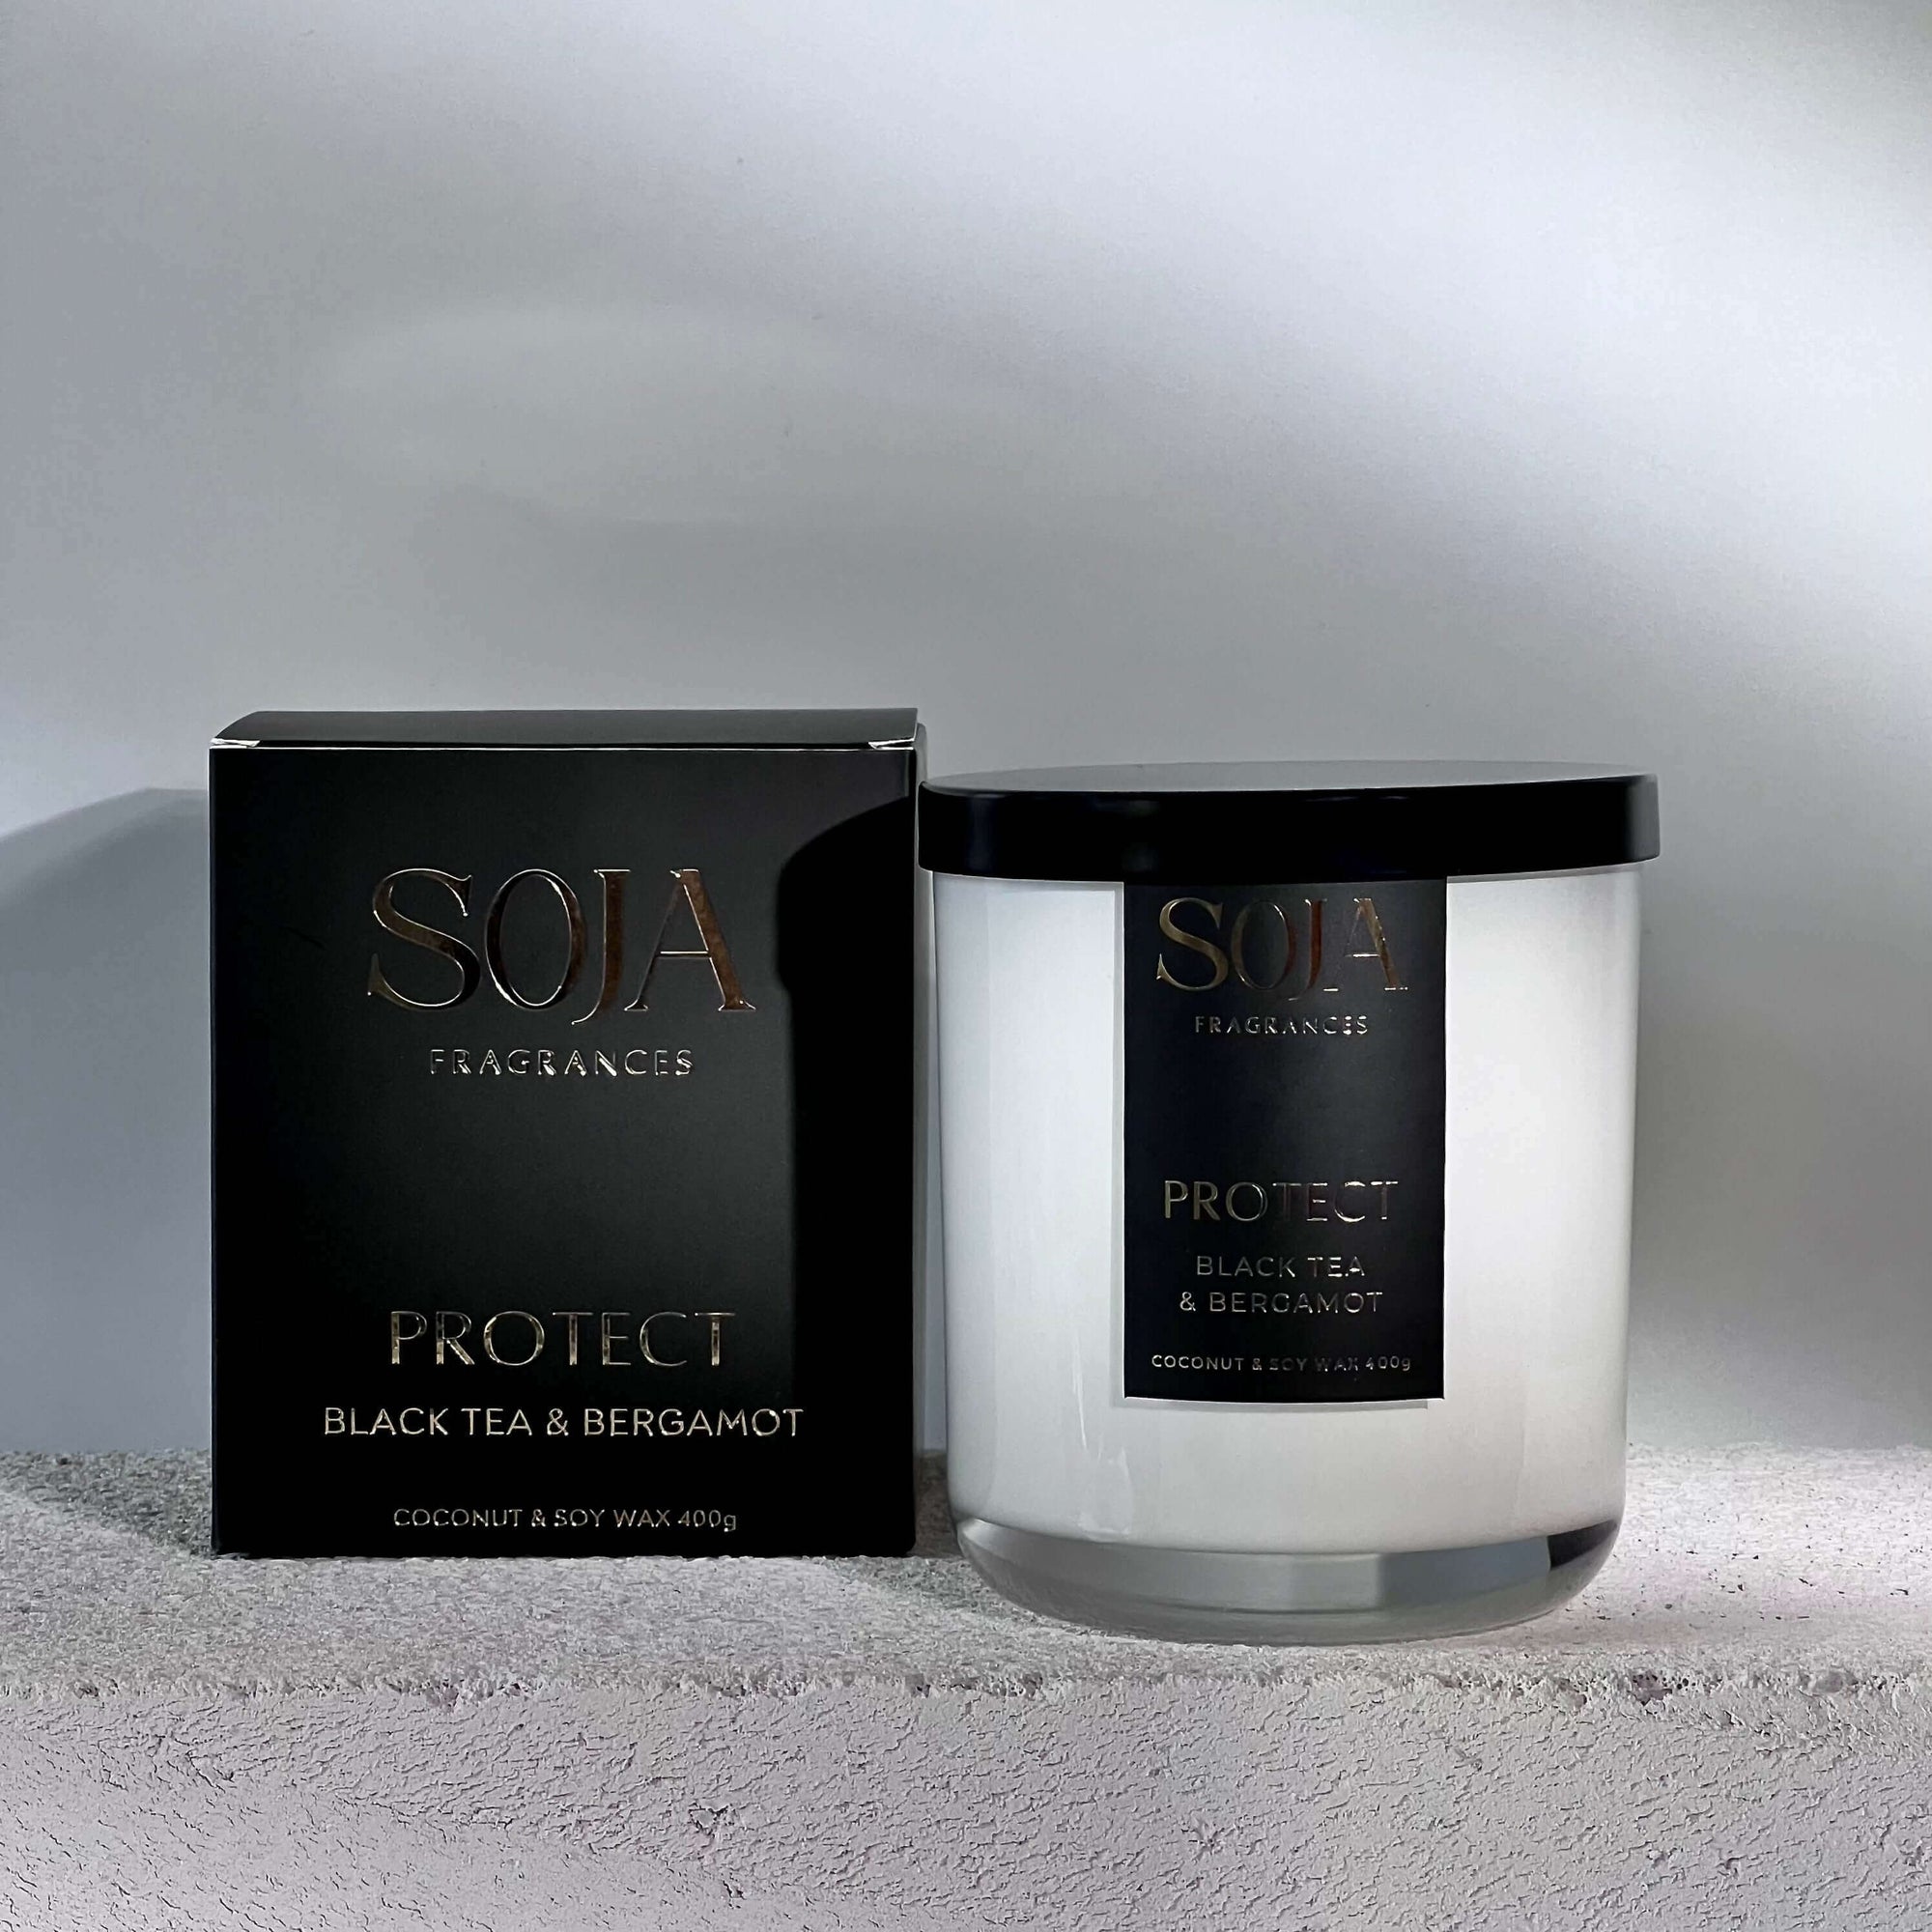 Protect black tourmaline crystals black tea & Bergamot perfumed candle next to candle box